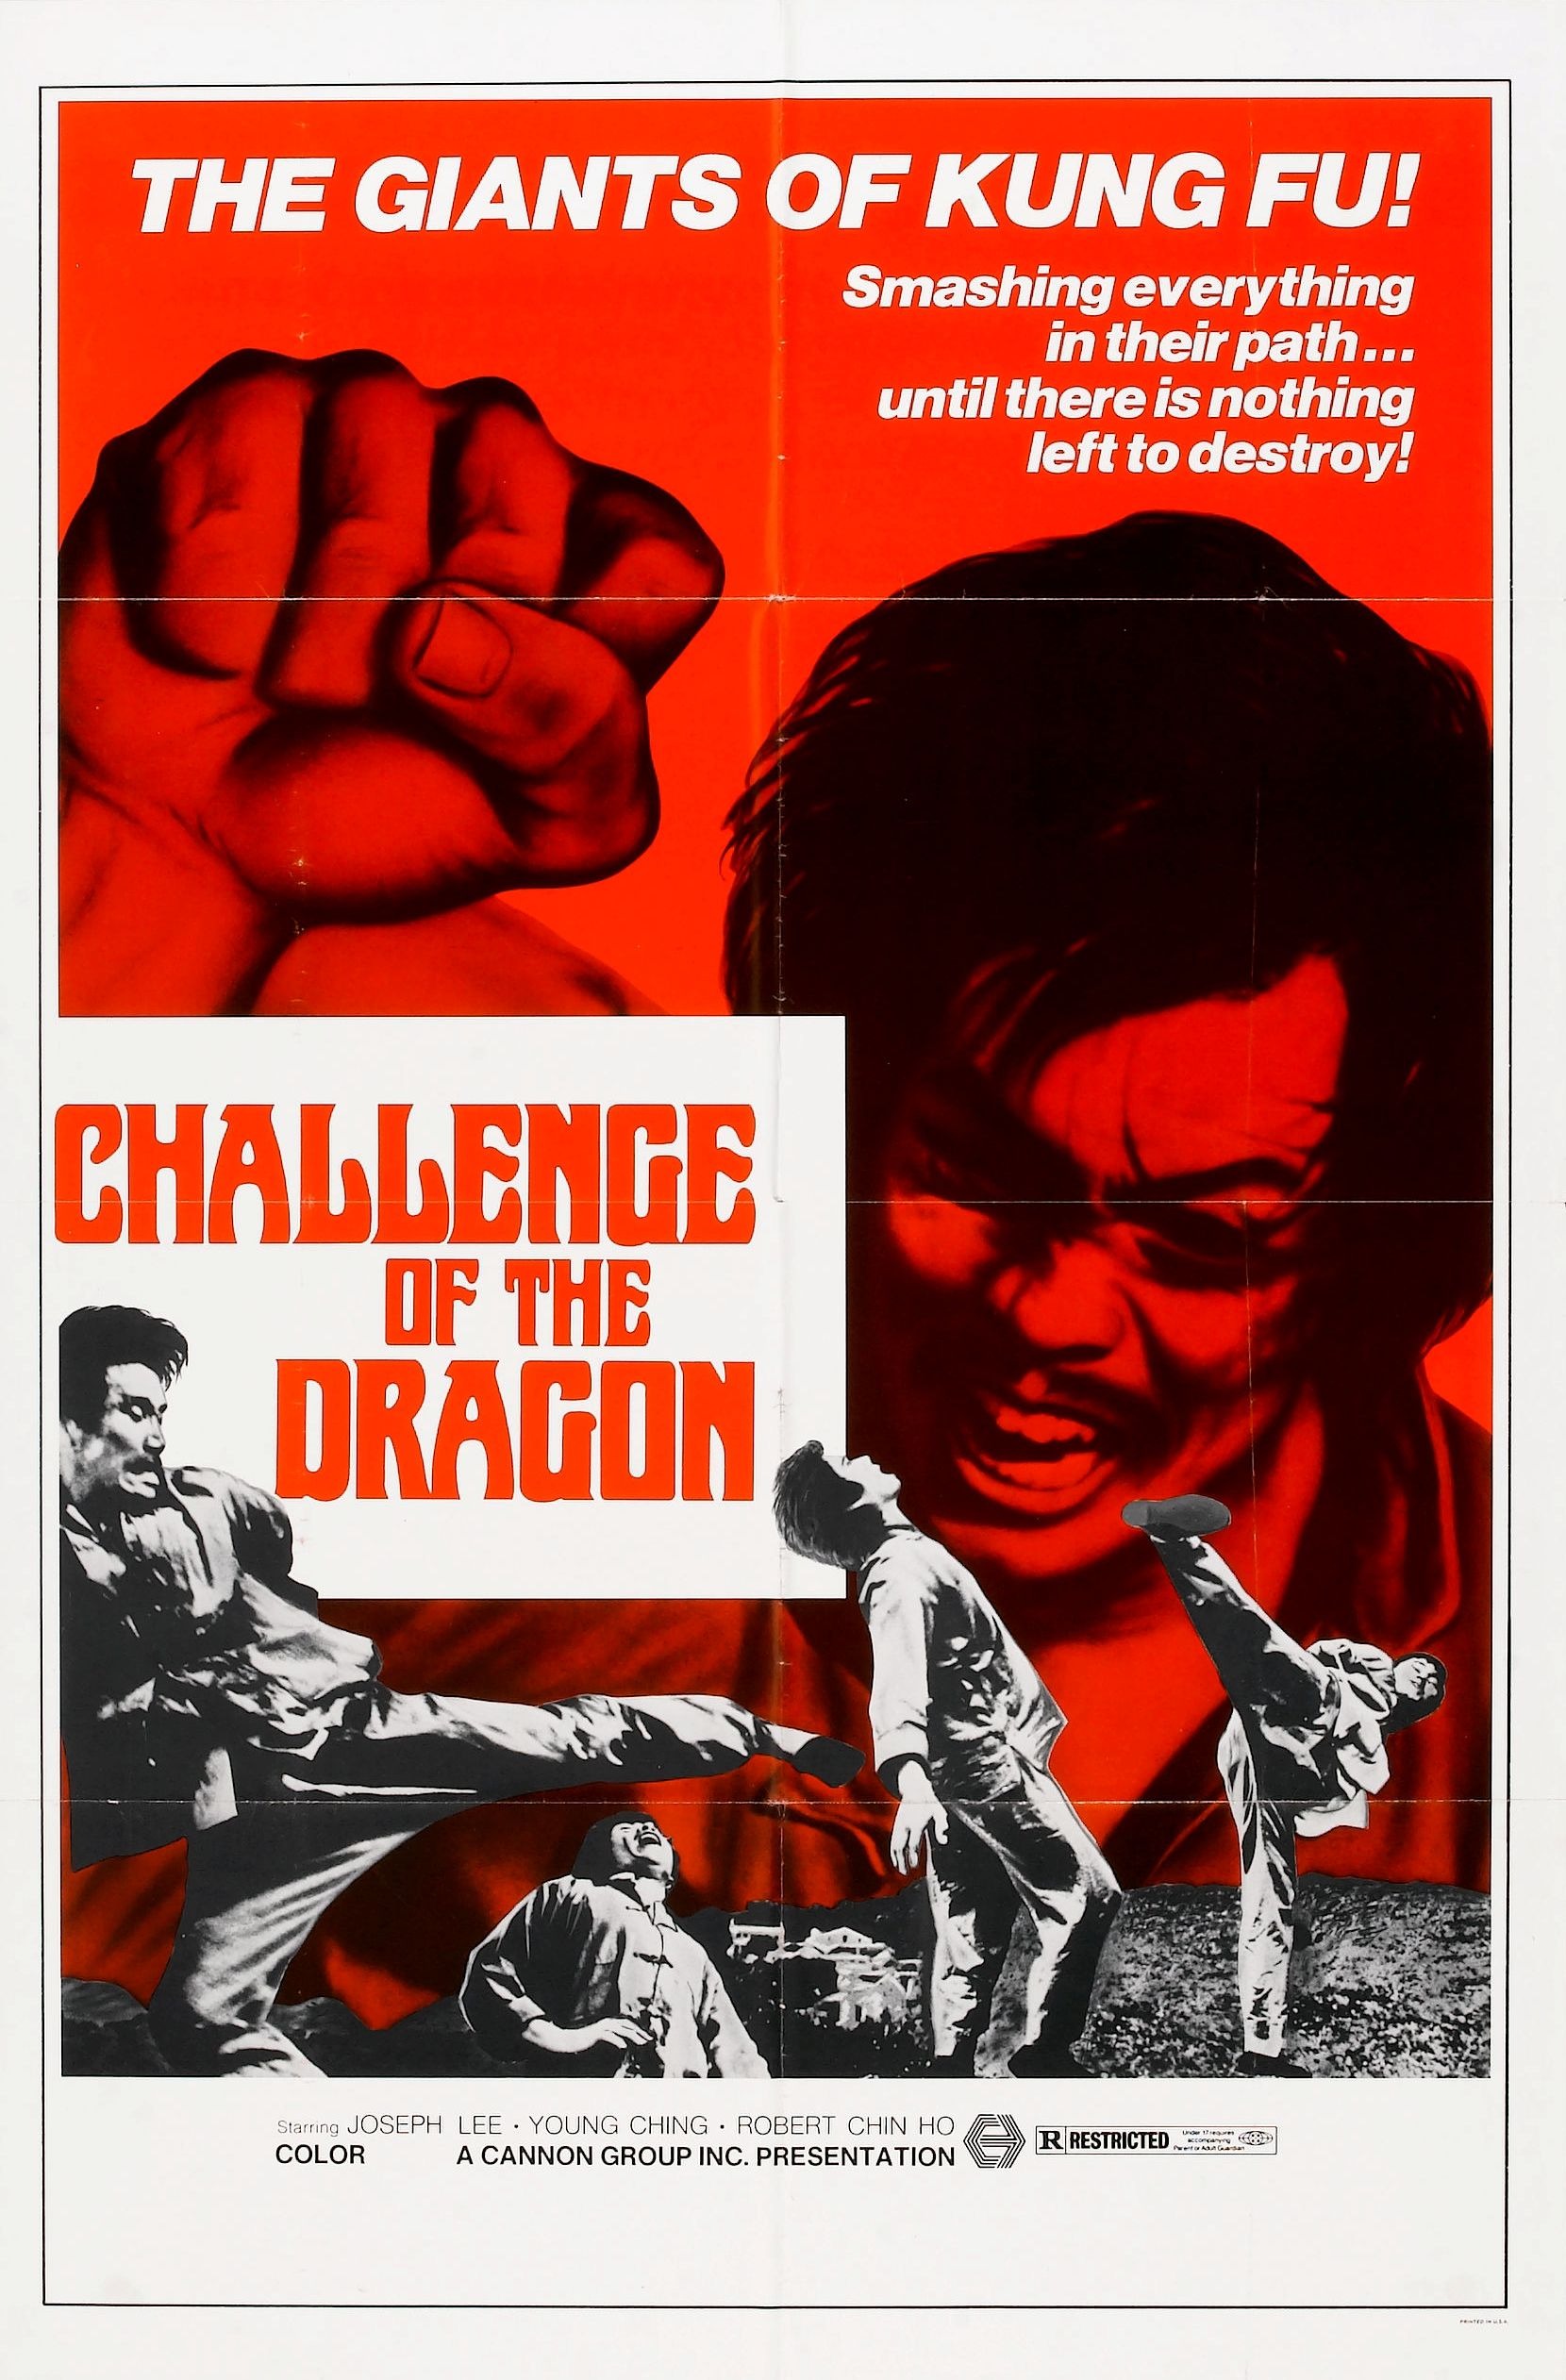 Mega Sized Movie Poster Image for Long hu tan 